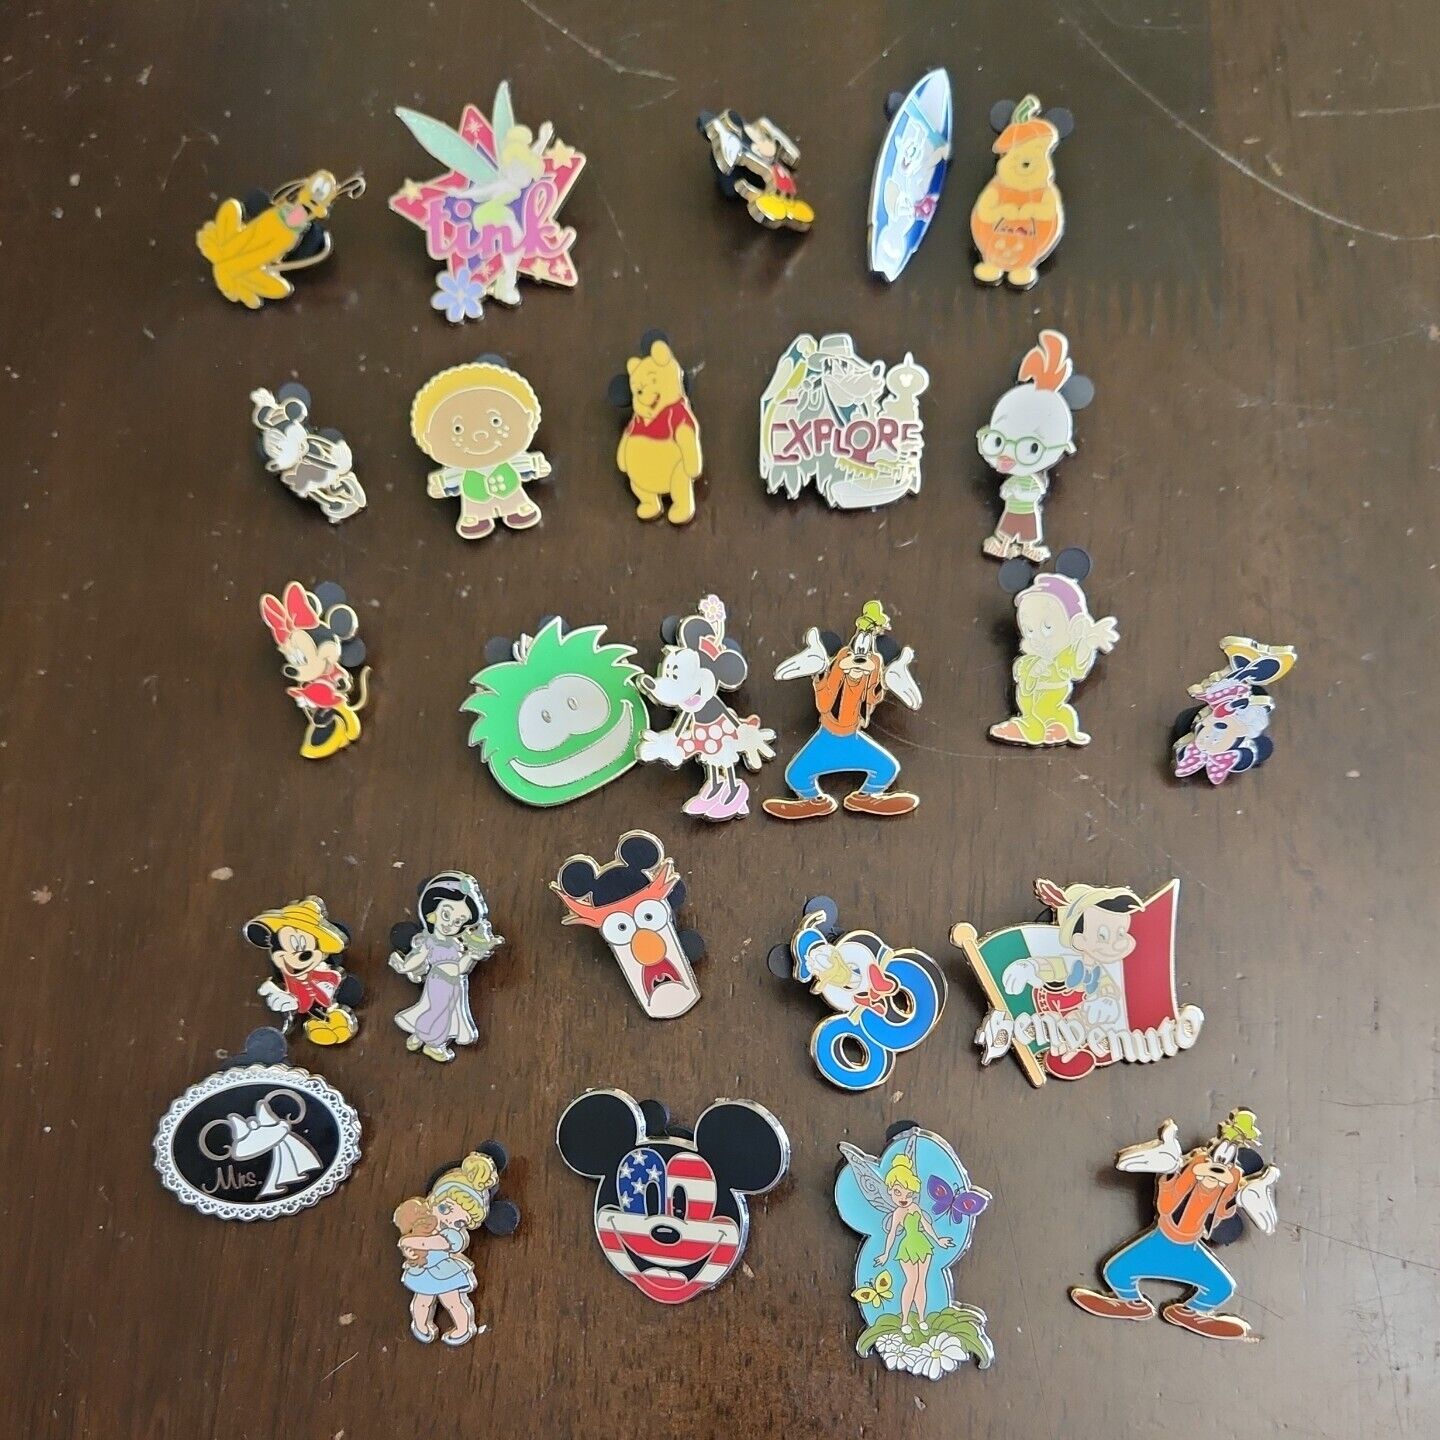 Disney Trading Pins Lot Of 26 no duplicates variety of characters. Mickey pinbak